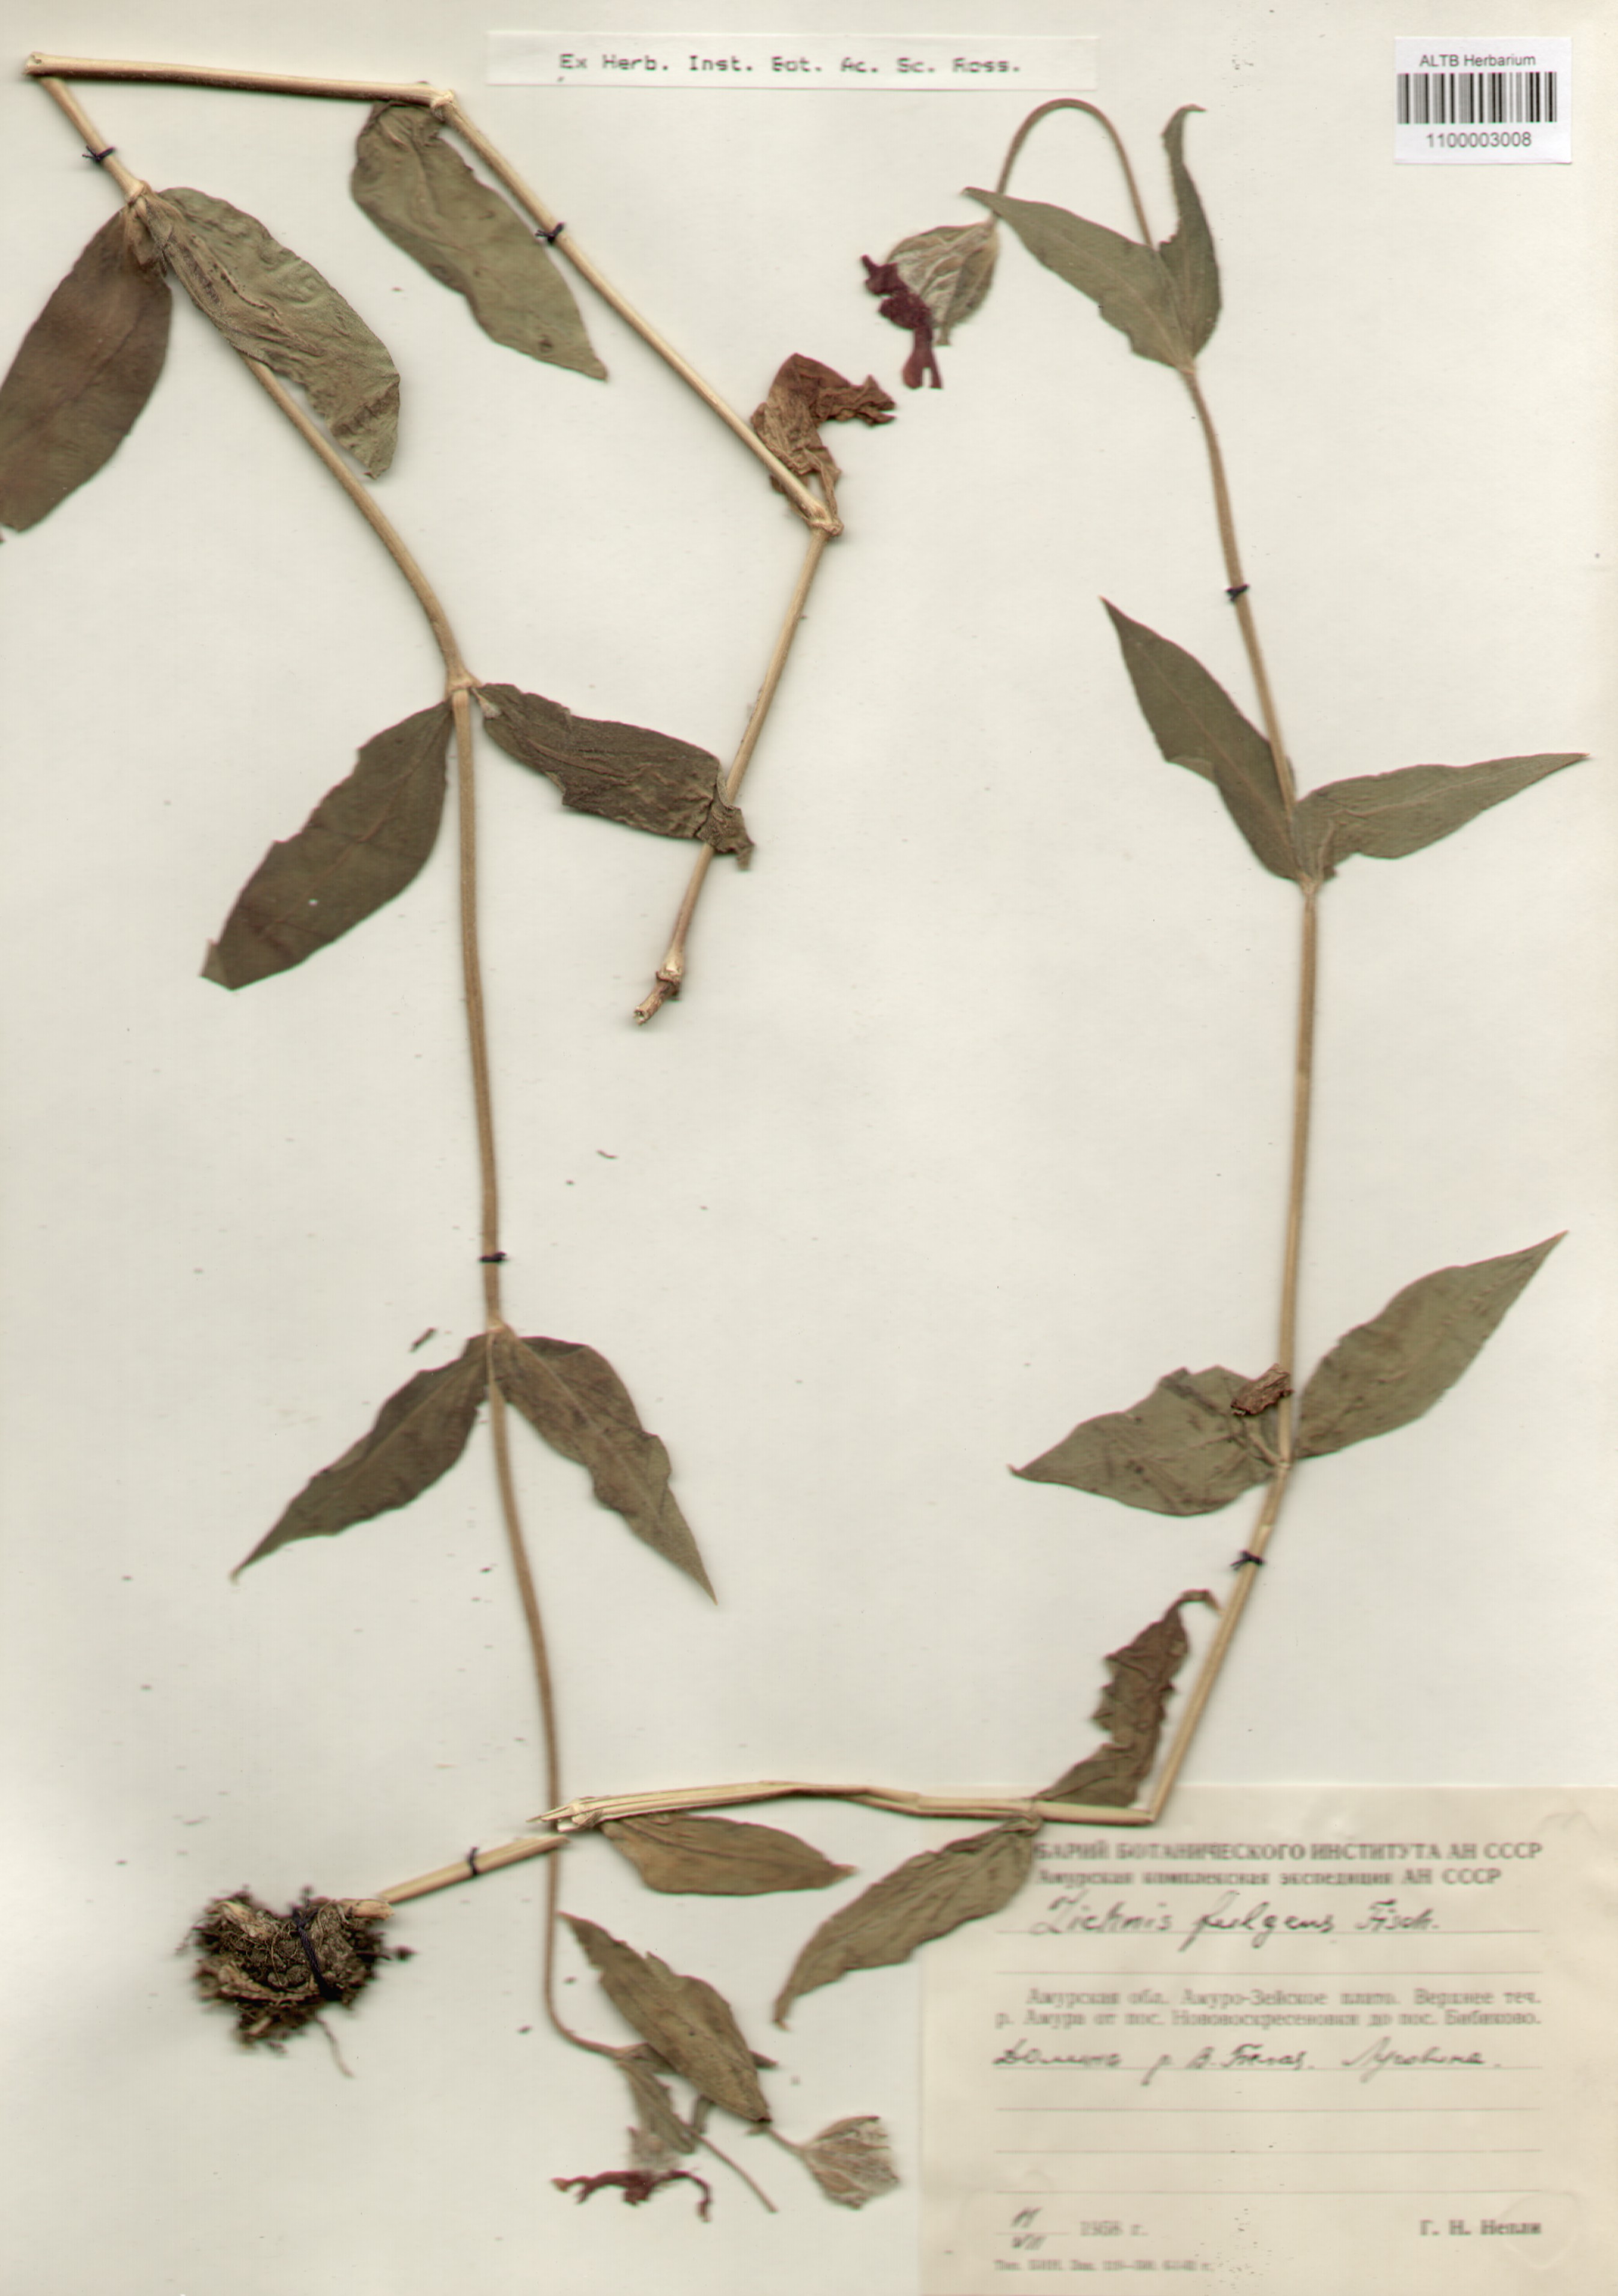 Caryophyllaceae,Lychnis fulgens Fisch. ex Curt.